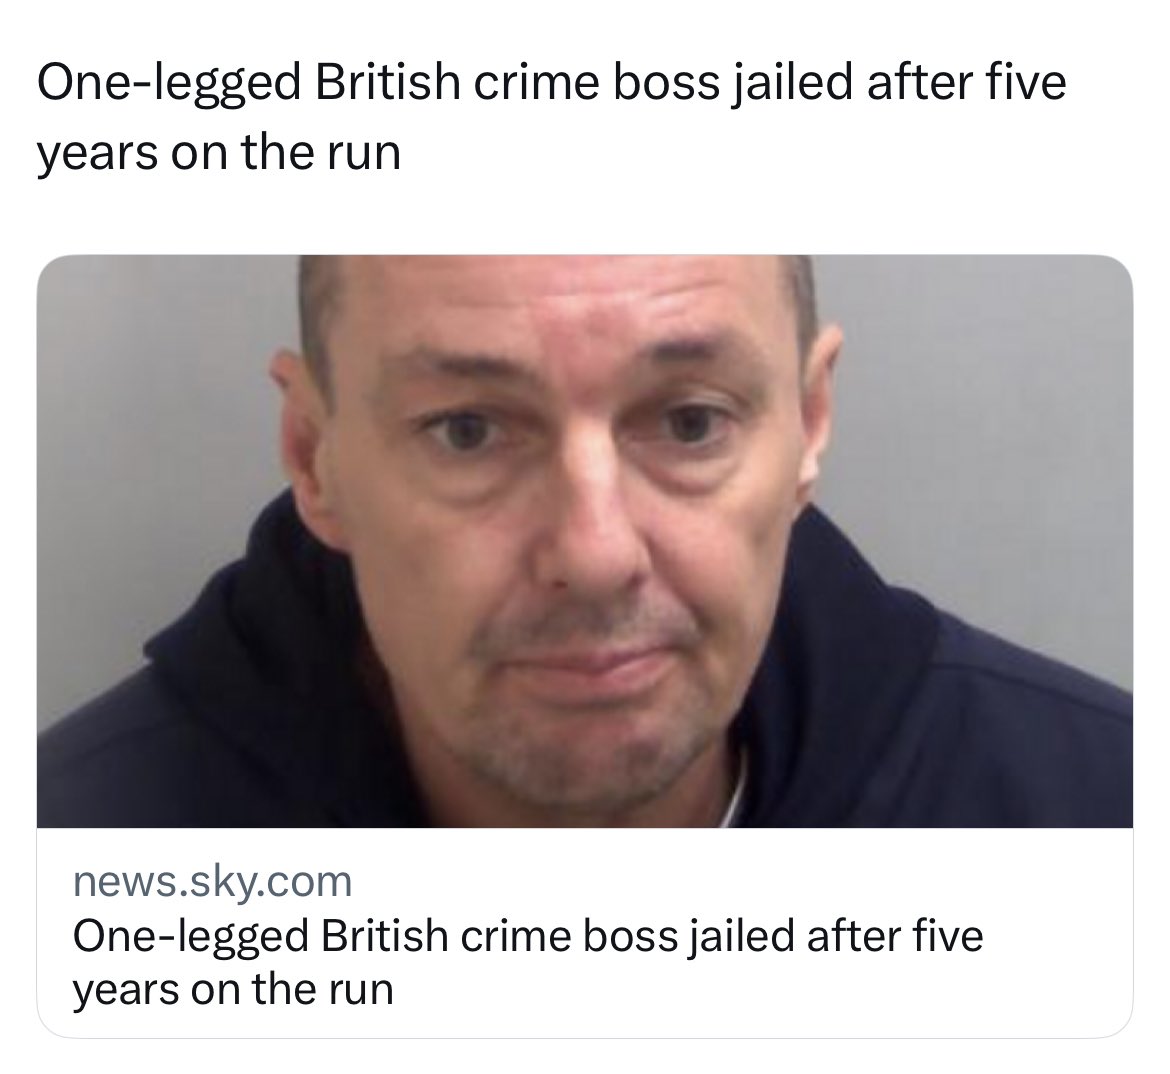 richard wakeling - Onelegged British crime boss jailed after five years on the run news.sky.com Onelegged British crime boss jailed after five years on the run